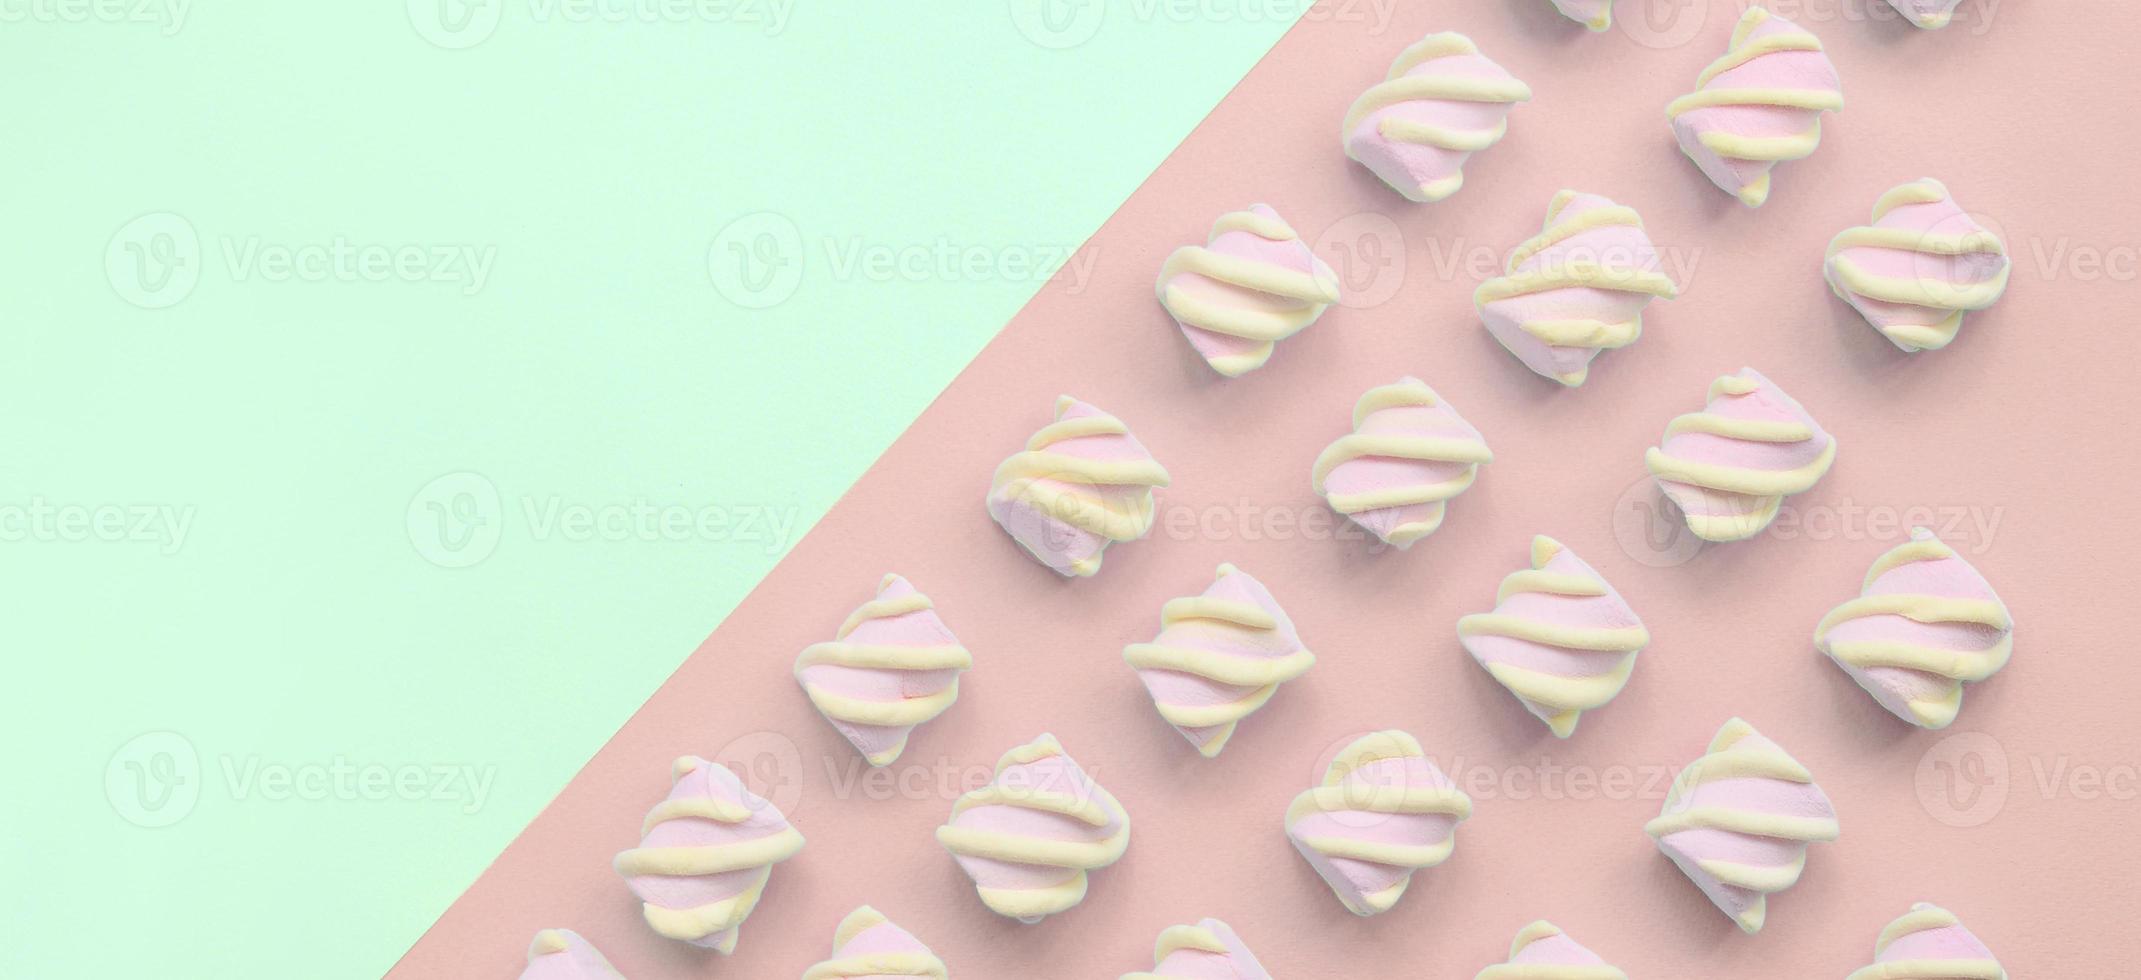 marshmallow colorido disposto em fundo de papel turquesa e rosa foto